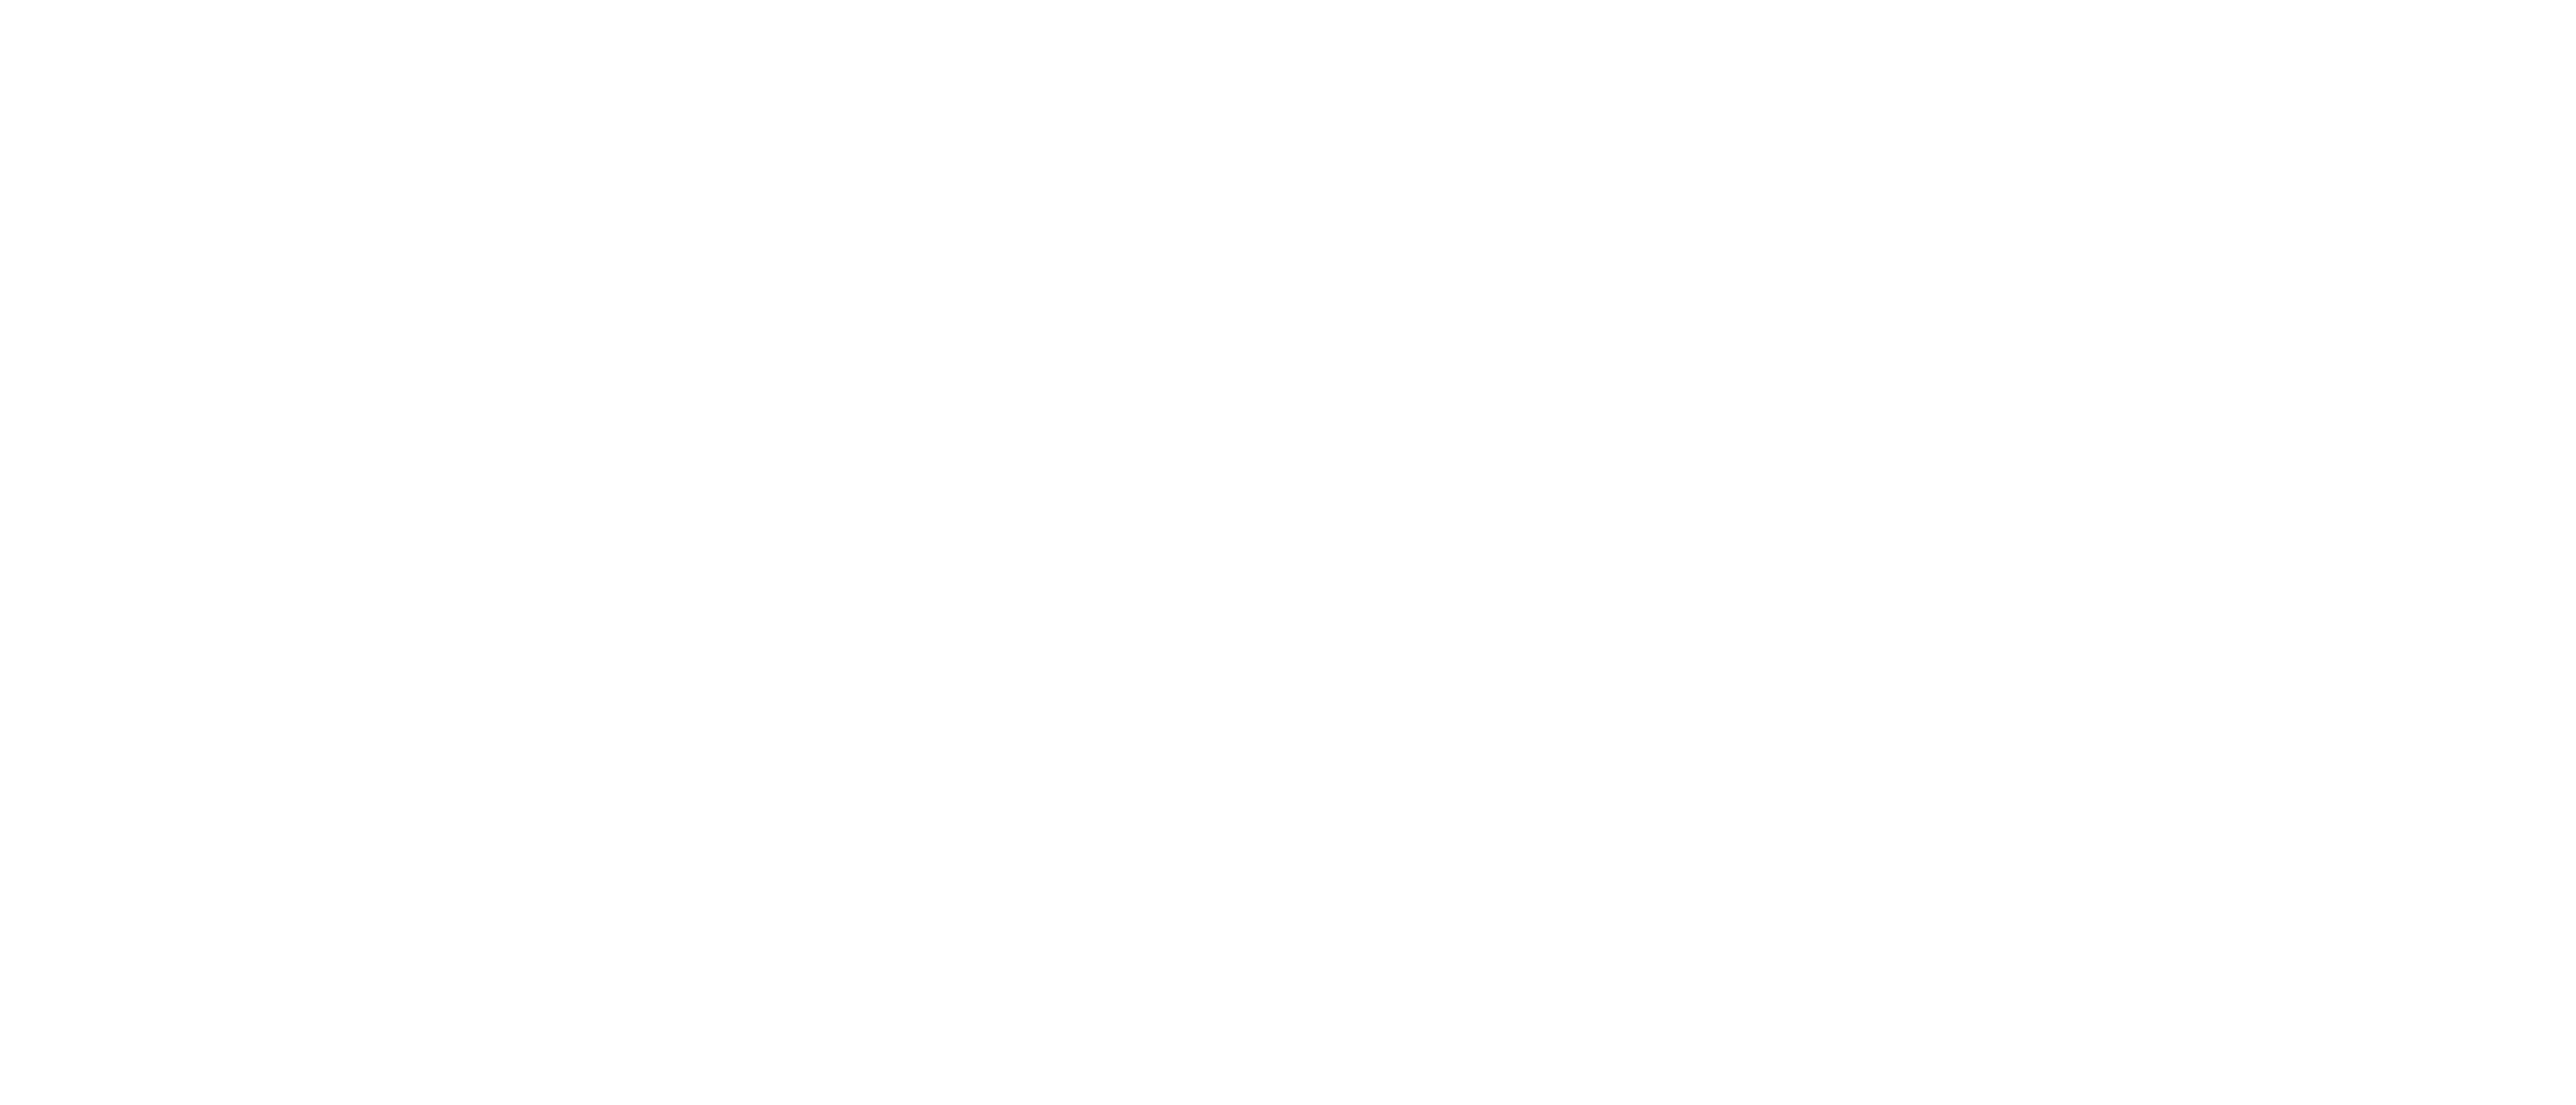 Protan logo